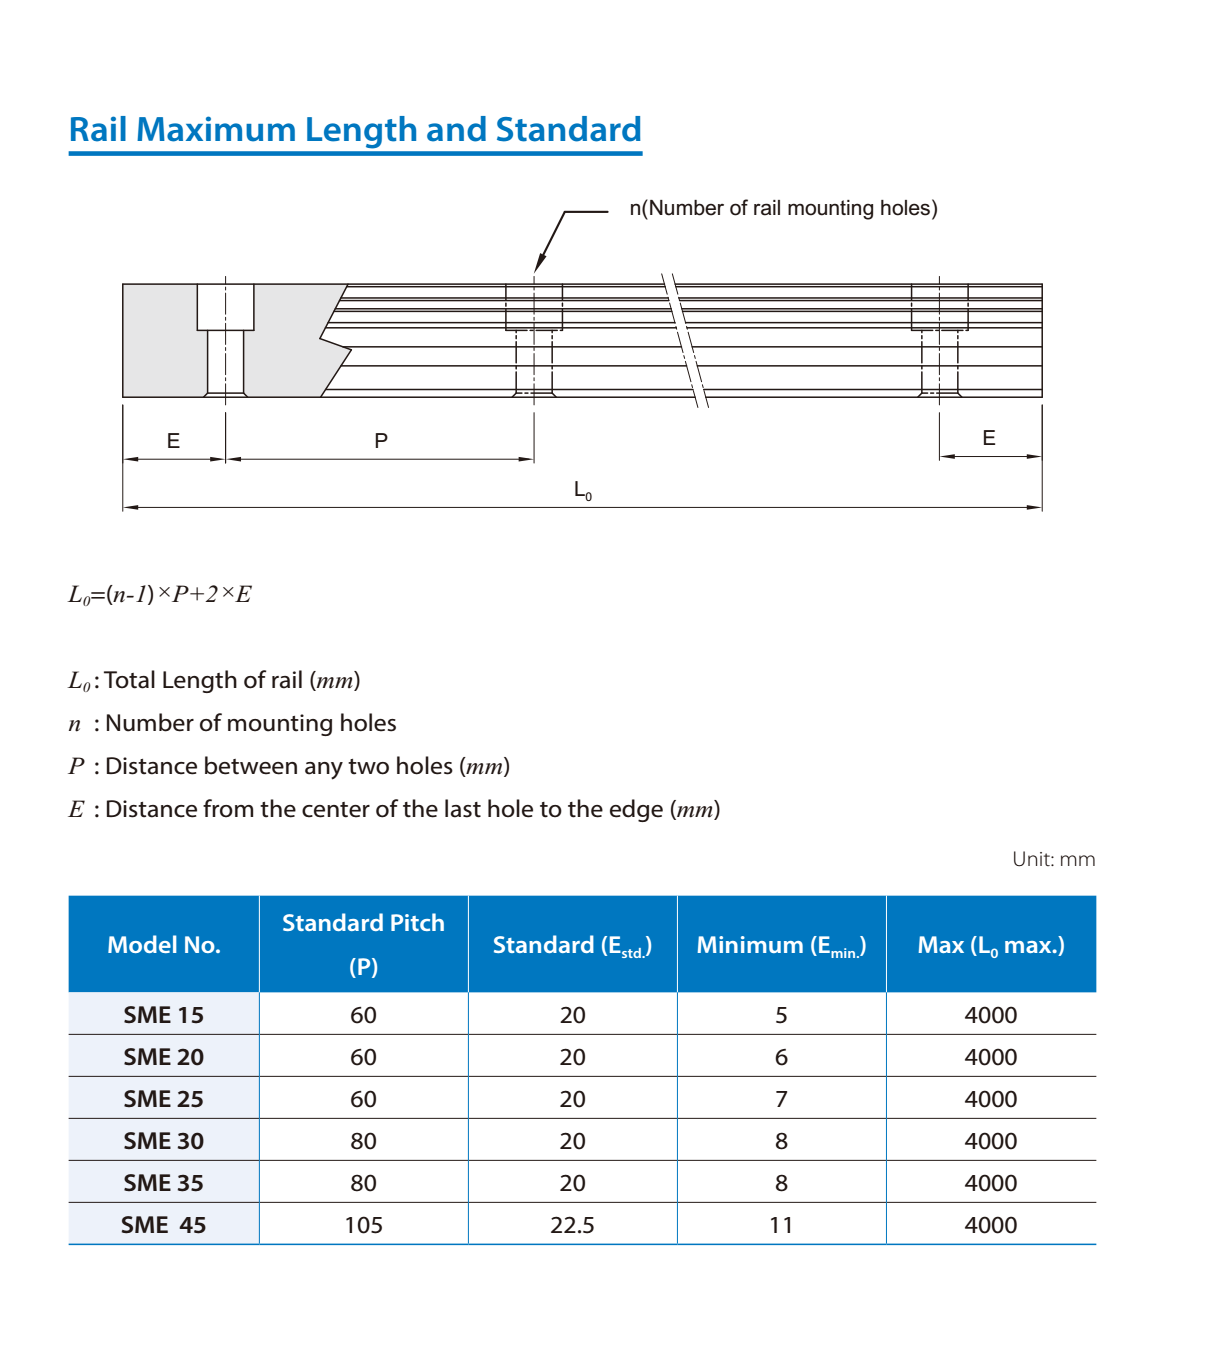 PMI Linear Guide SME Series Ball Chain Type Rail Maximum Length and Standard